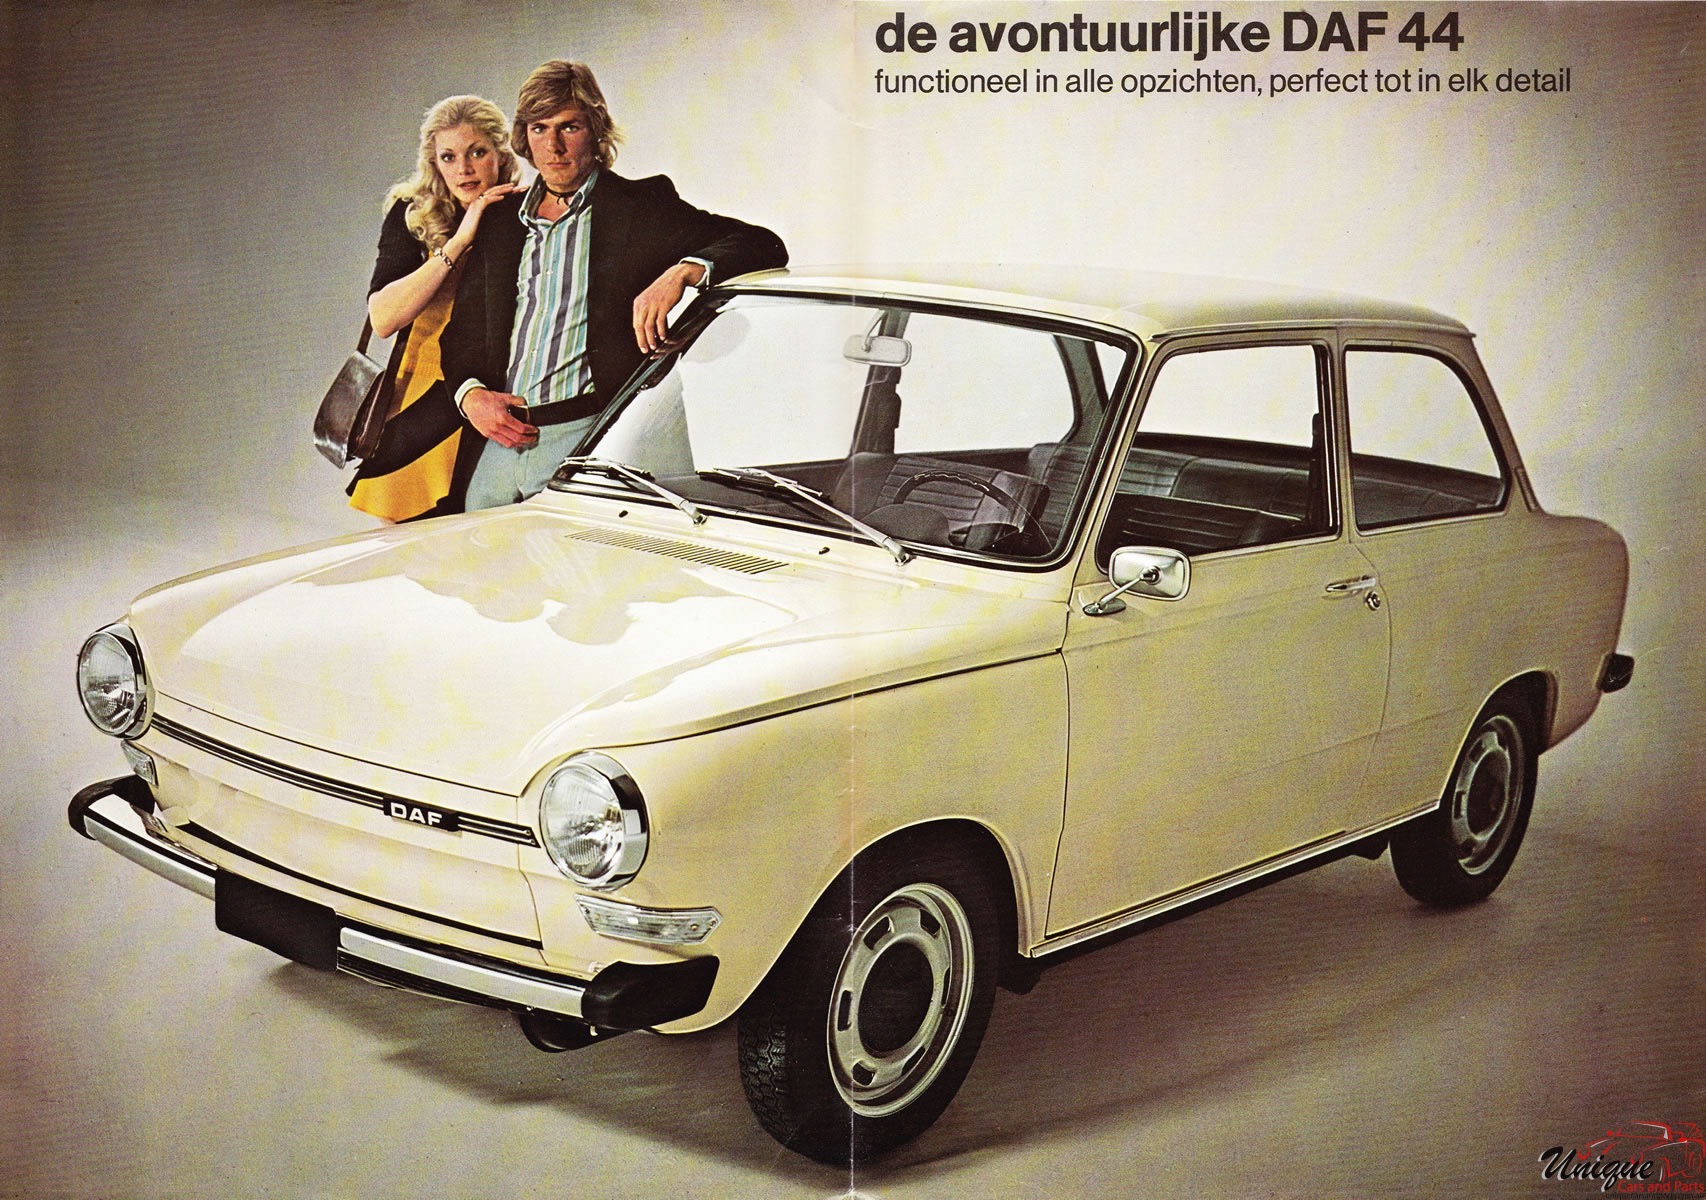 1972 DAF 44 Brochure Page 1